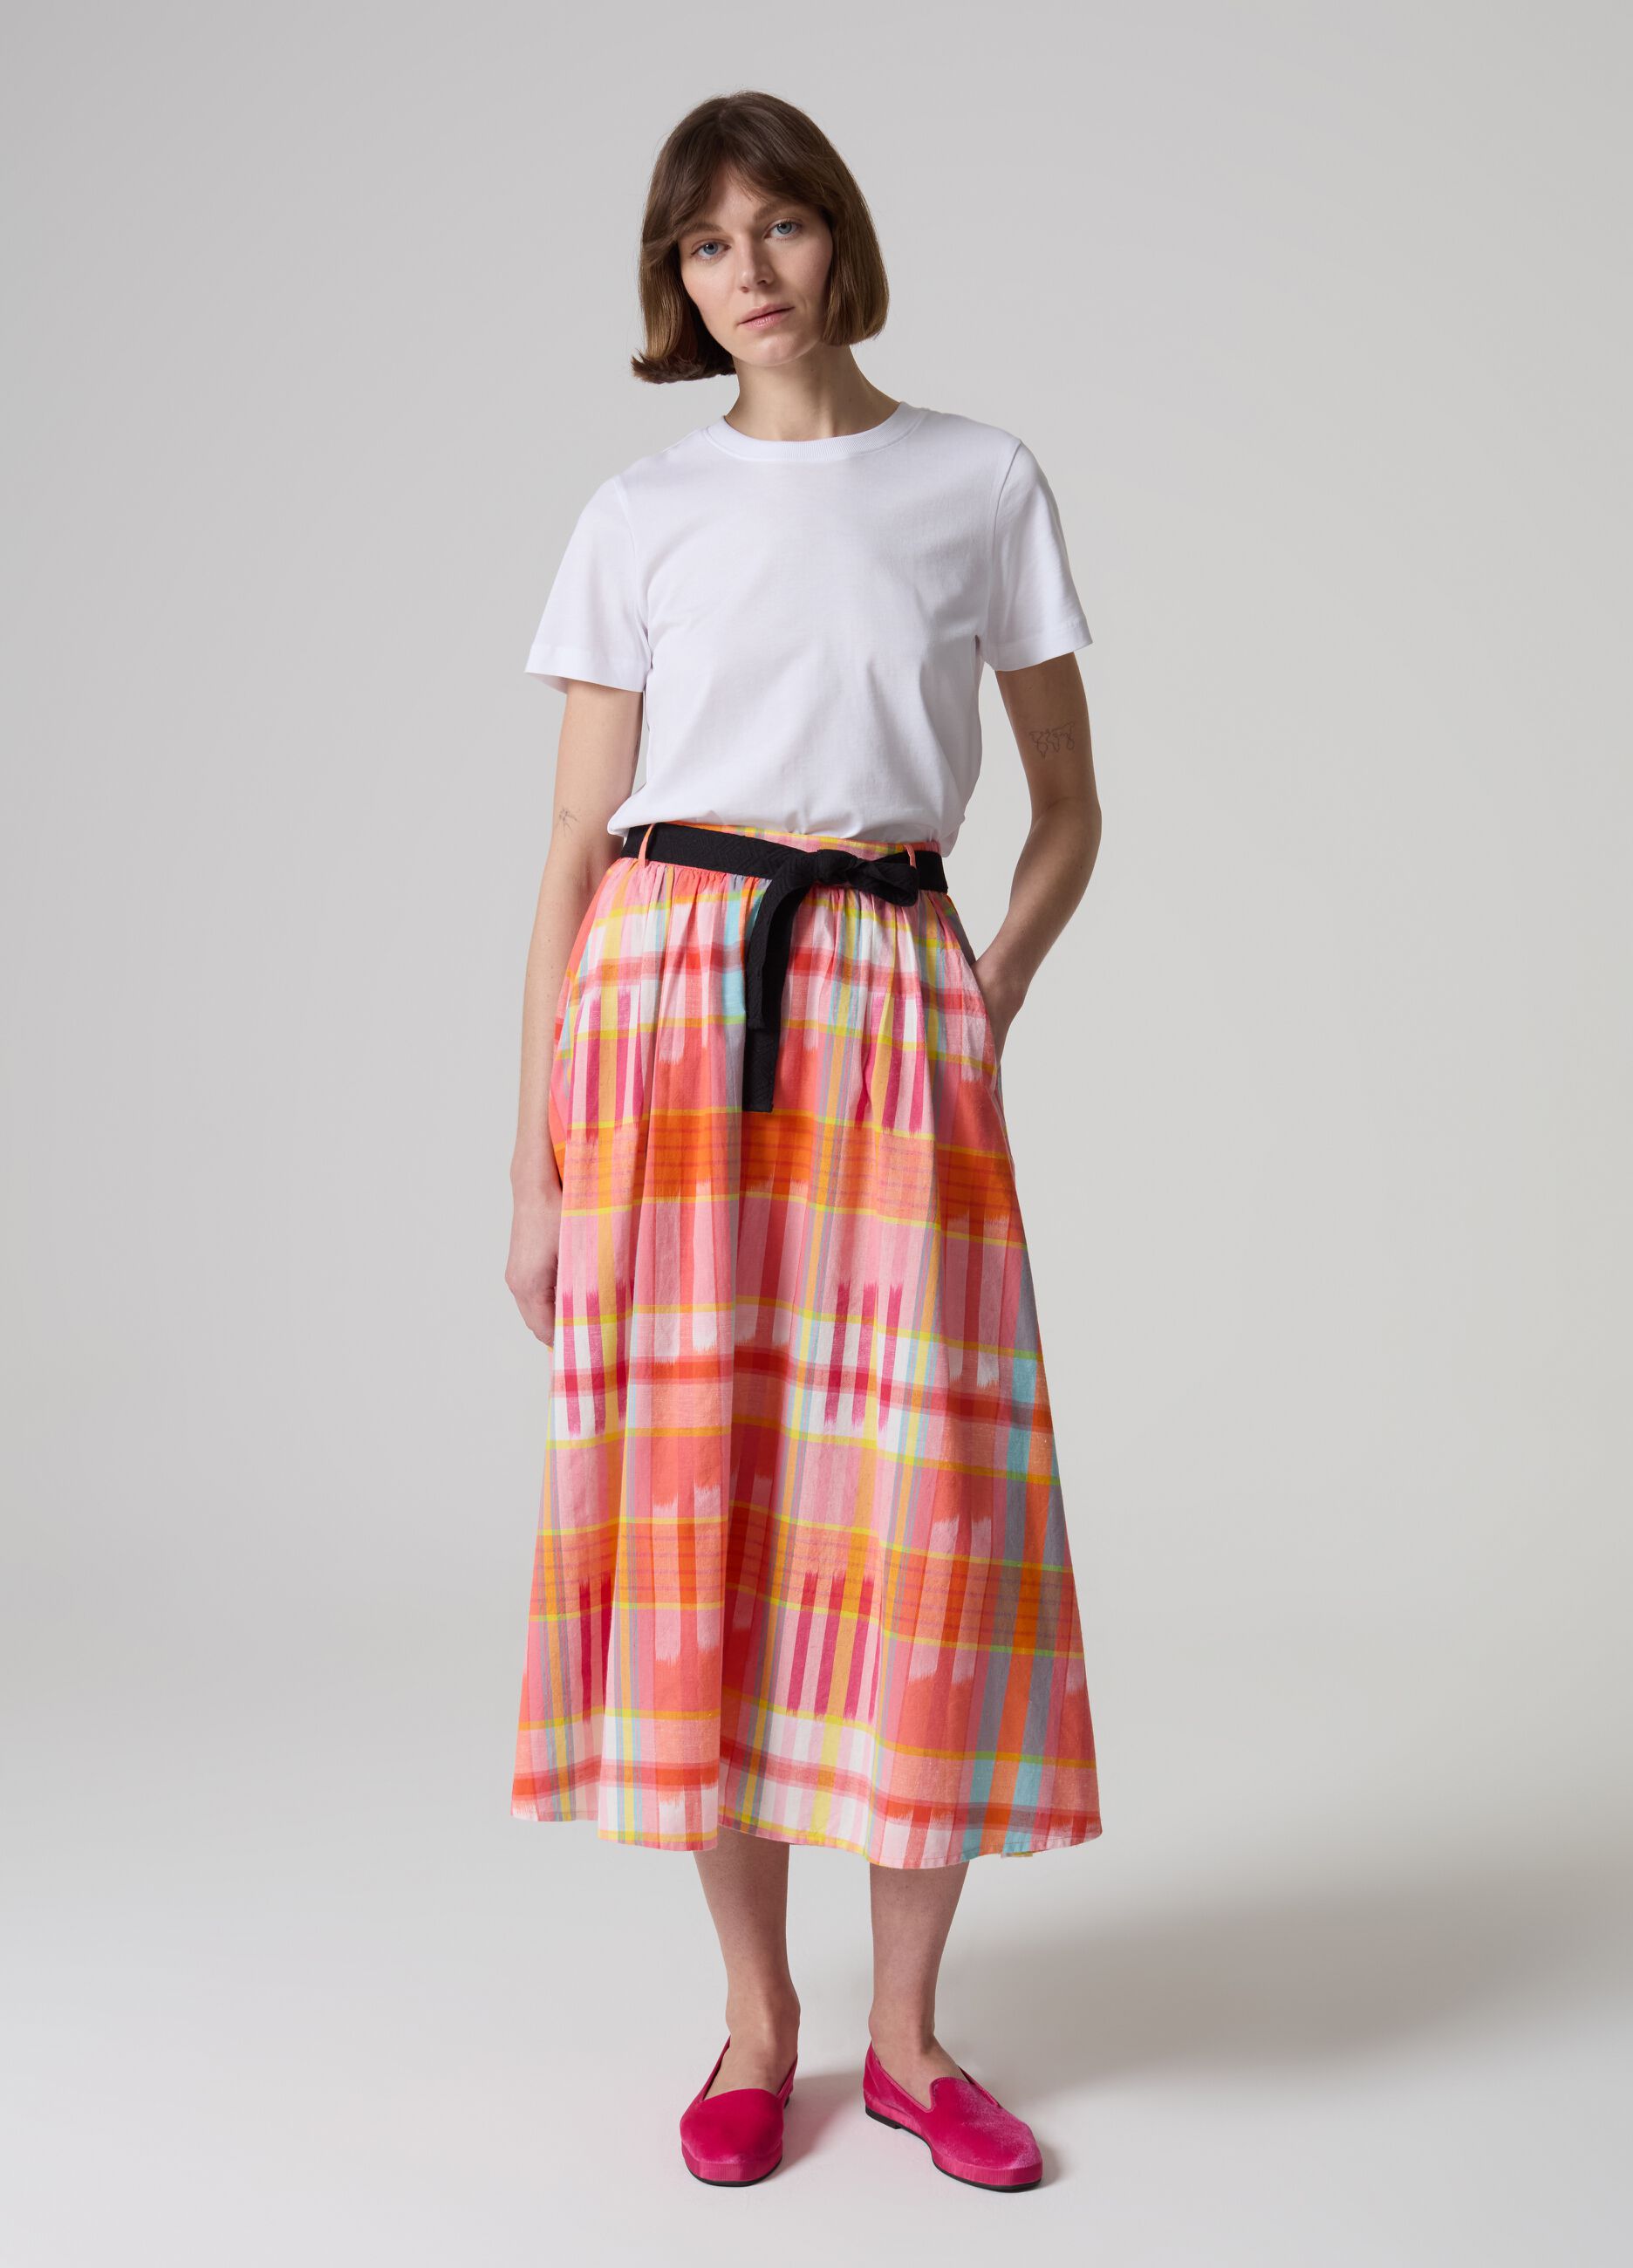 Full midi skirt with check pattern